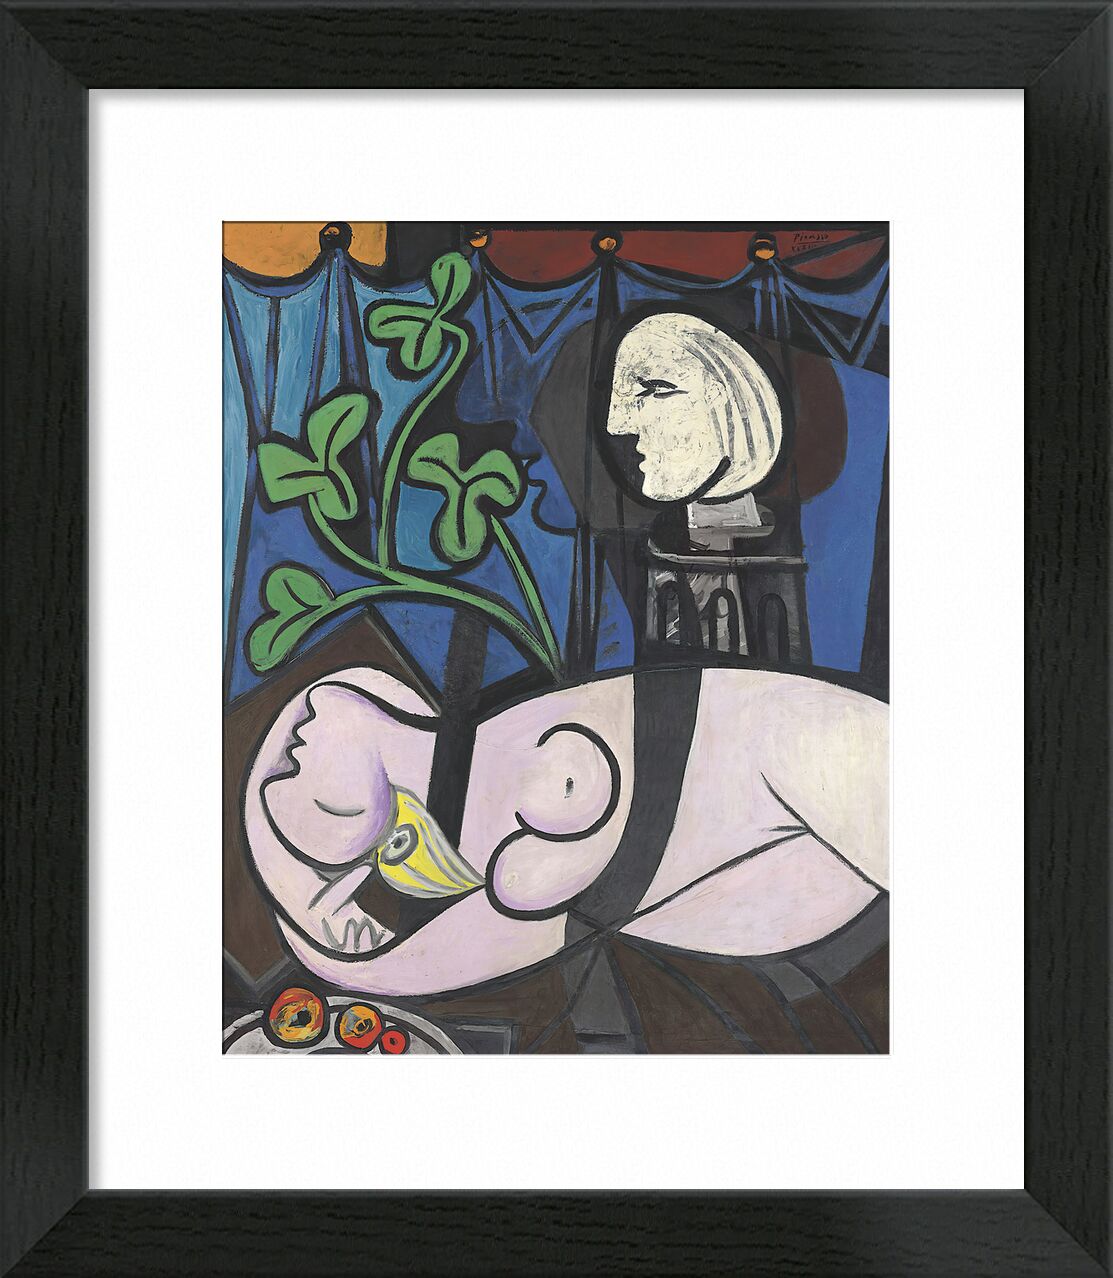 Nude, Green Leaves and Bust - Picasso desde Bellas artes, Prodi Art, desnudo, picasso, pintura, abstracto, retrato, mujer